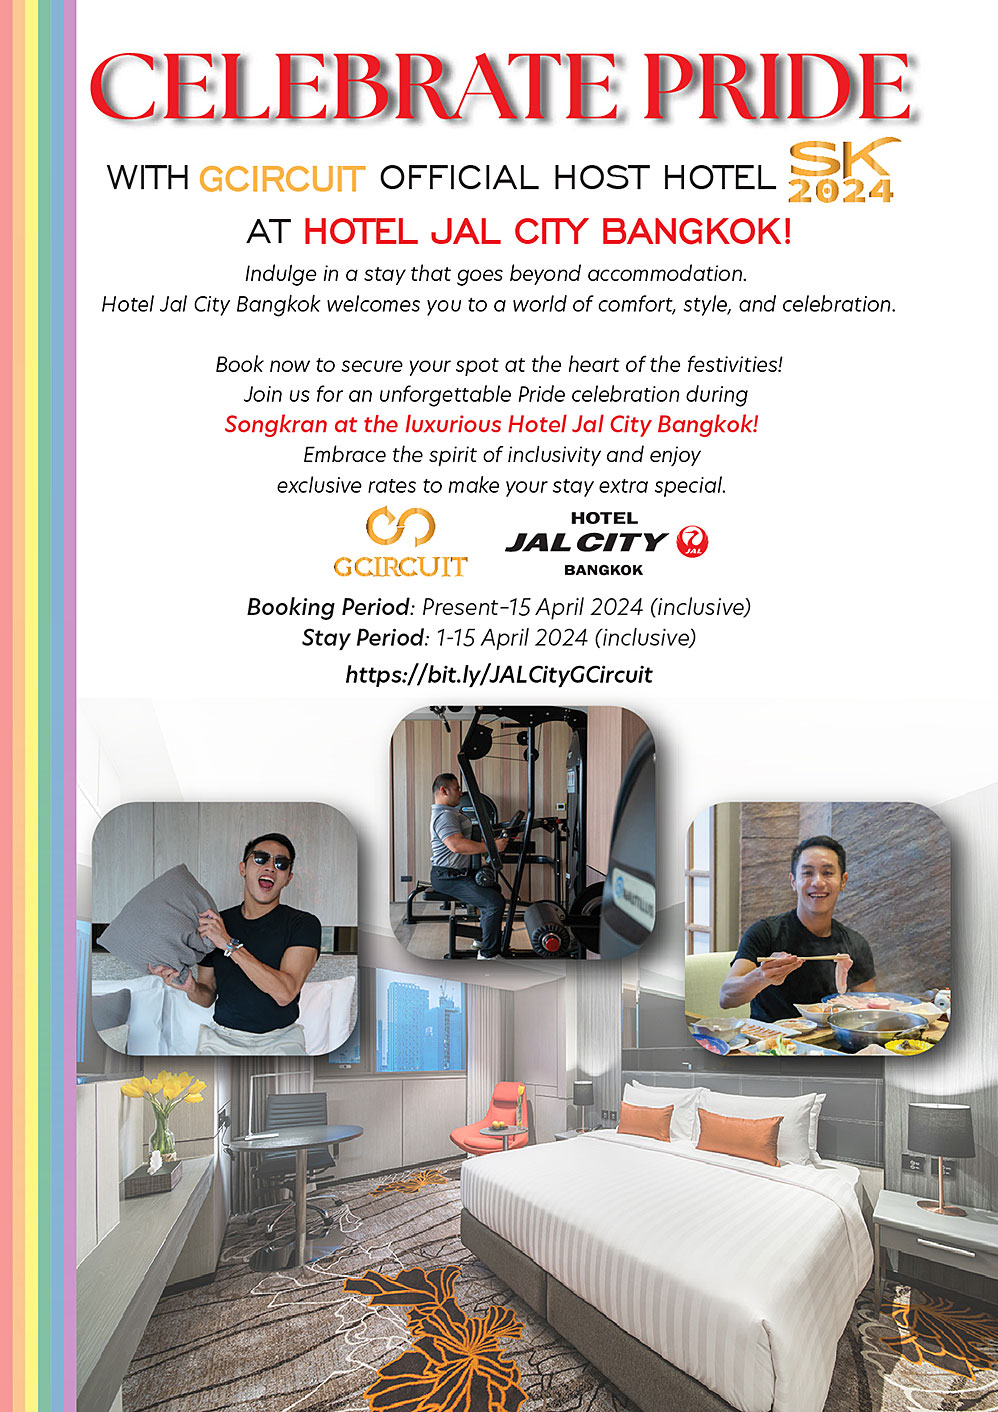 HOTEL JAL CITY BANGKOK